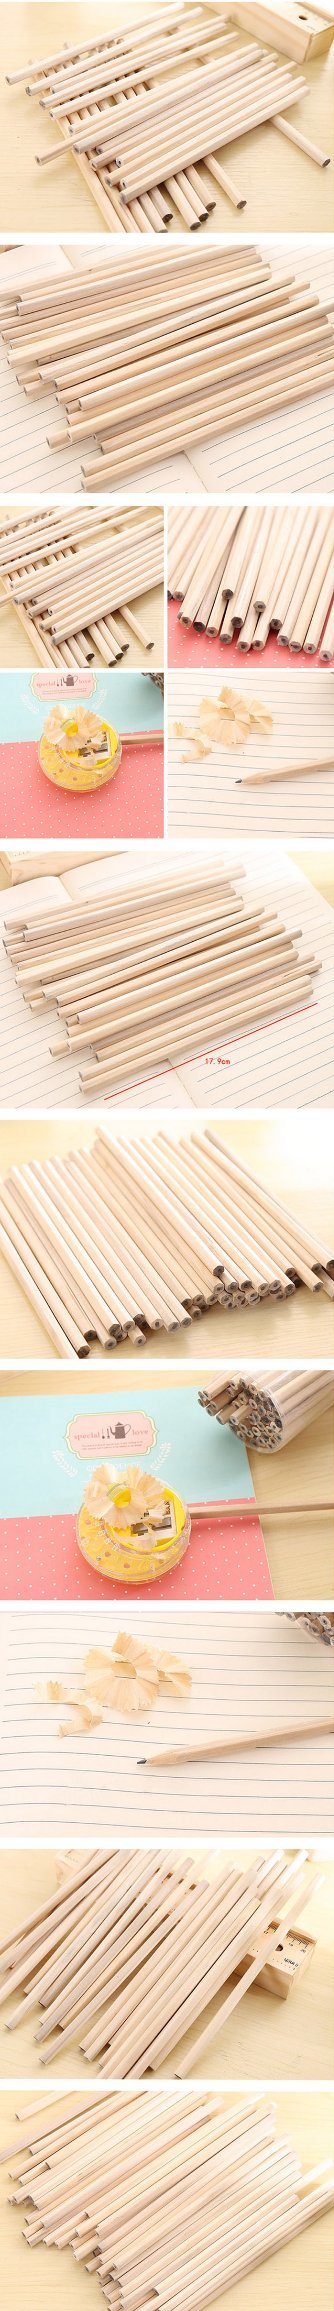 Promotion Pencil, Wooden Pencil, Lead Pencil, Office Supply, Promotional Pen